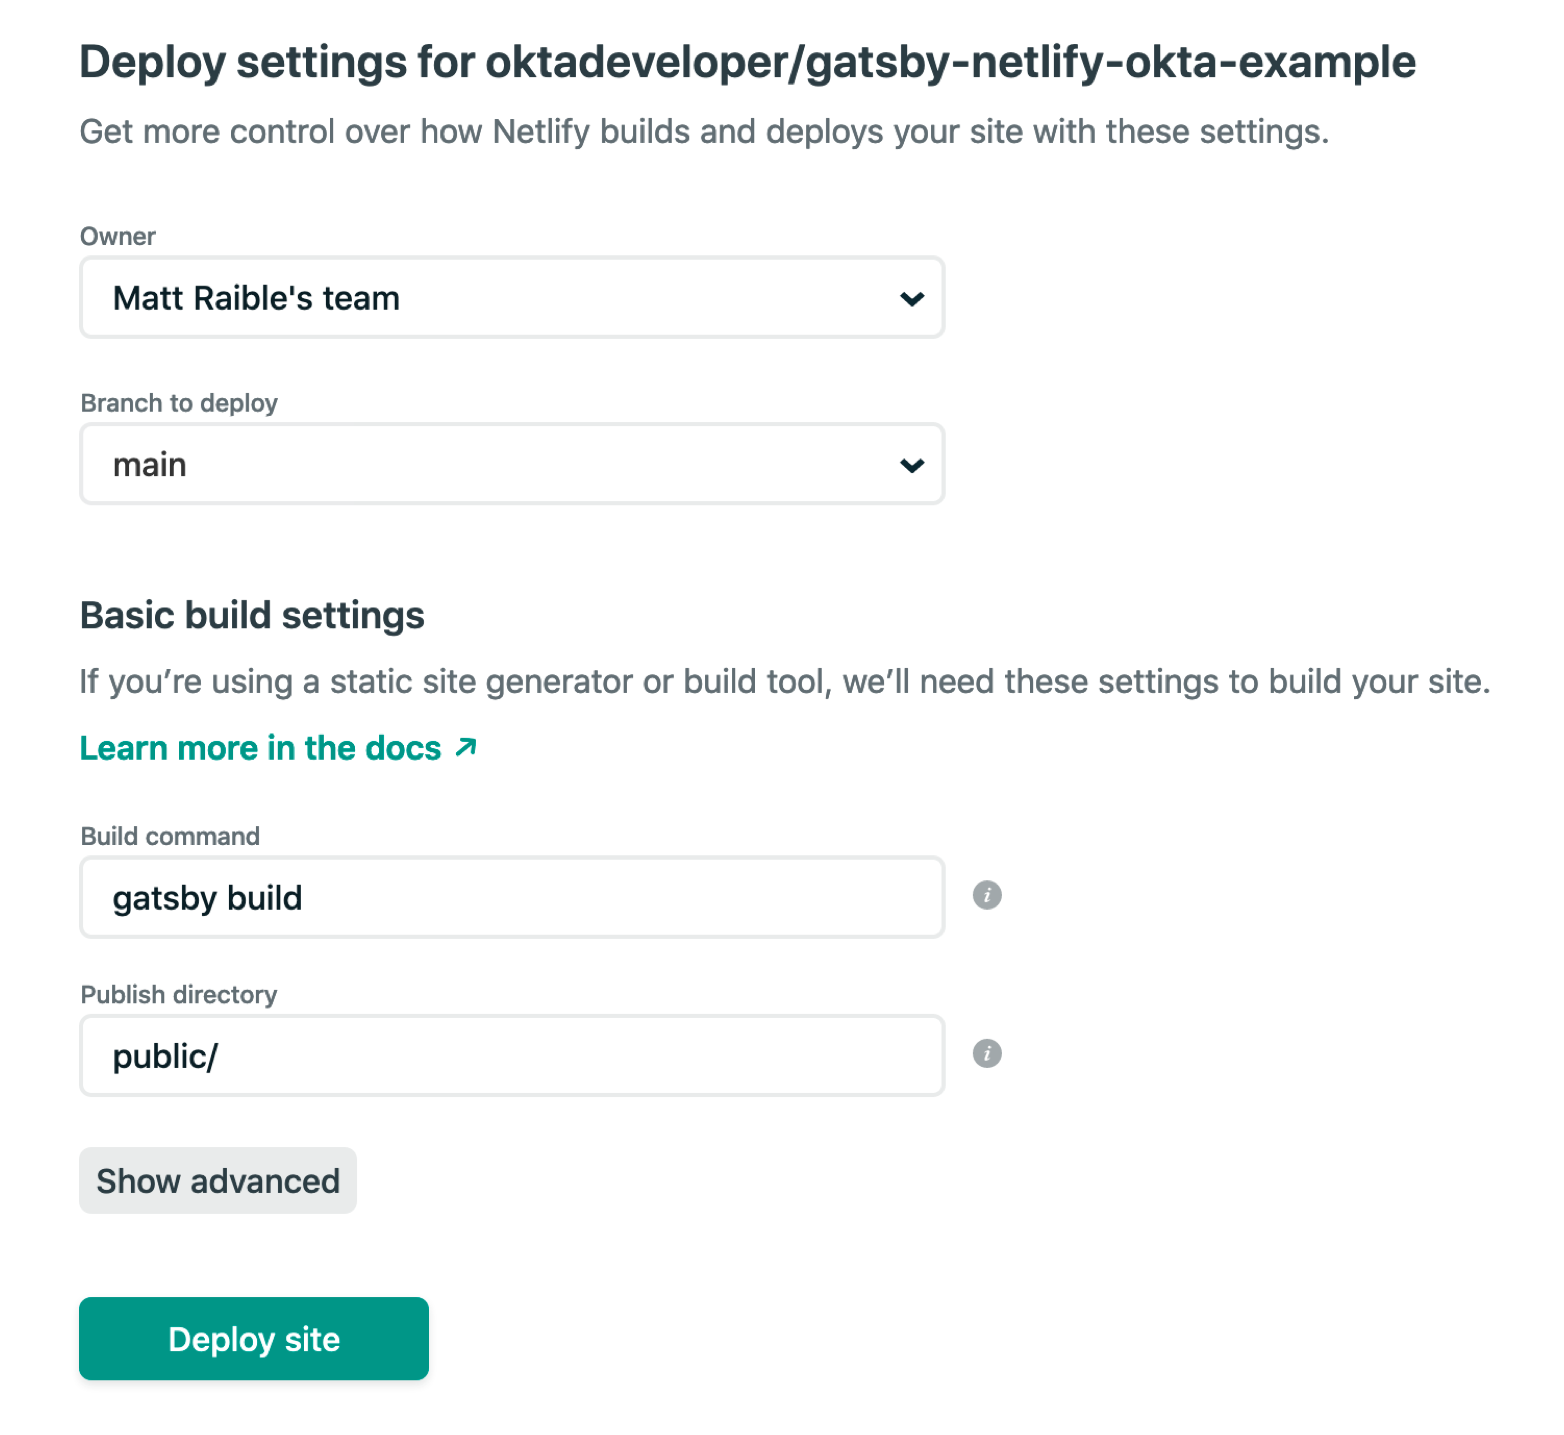 blog/gatsby-netlify-okta/netlify-deploy-settings.png